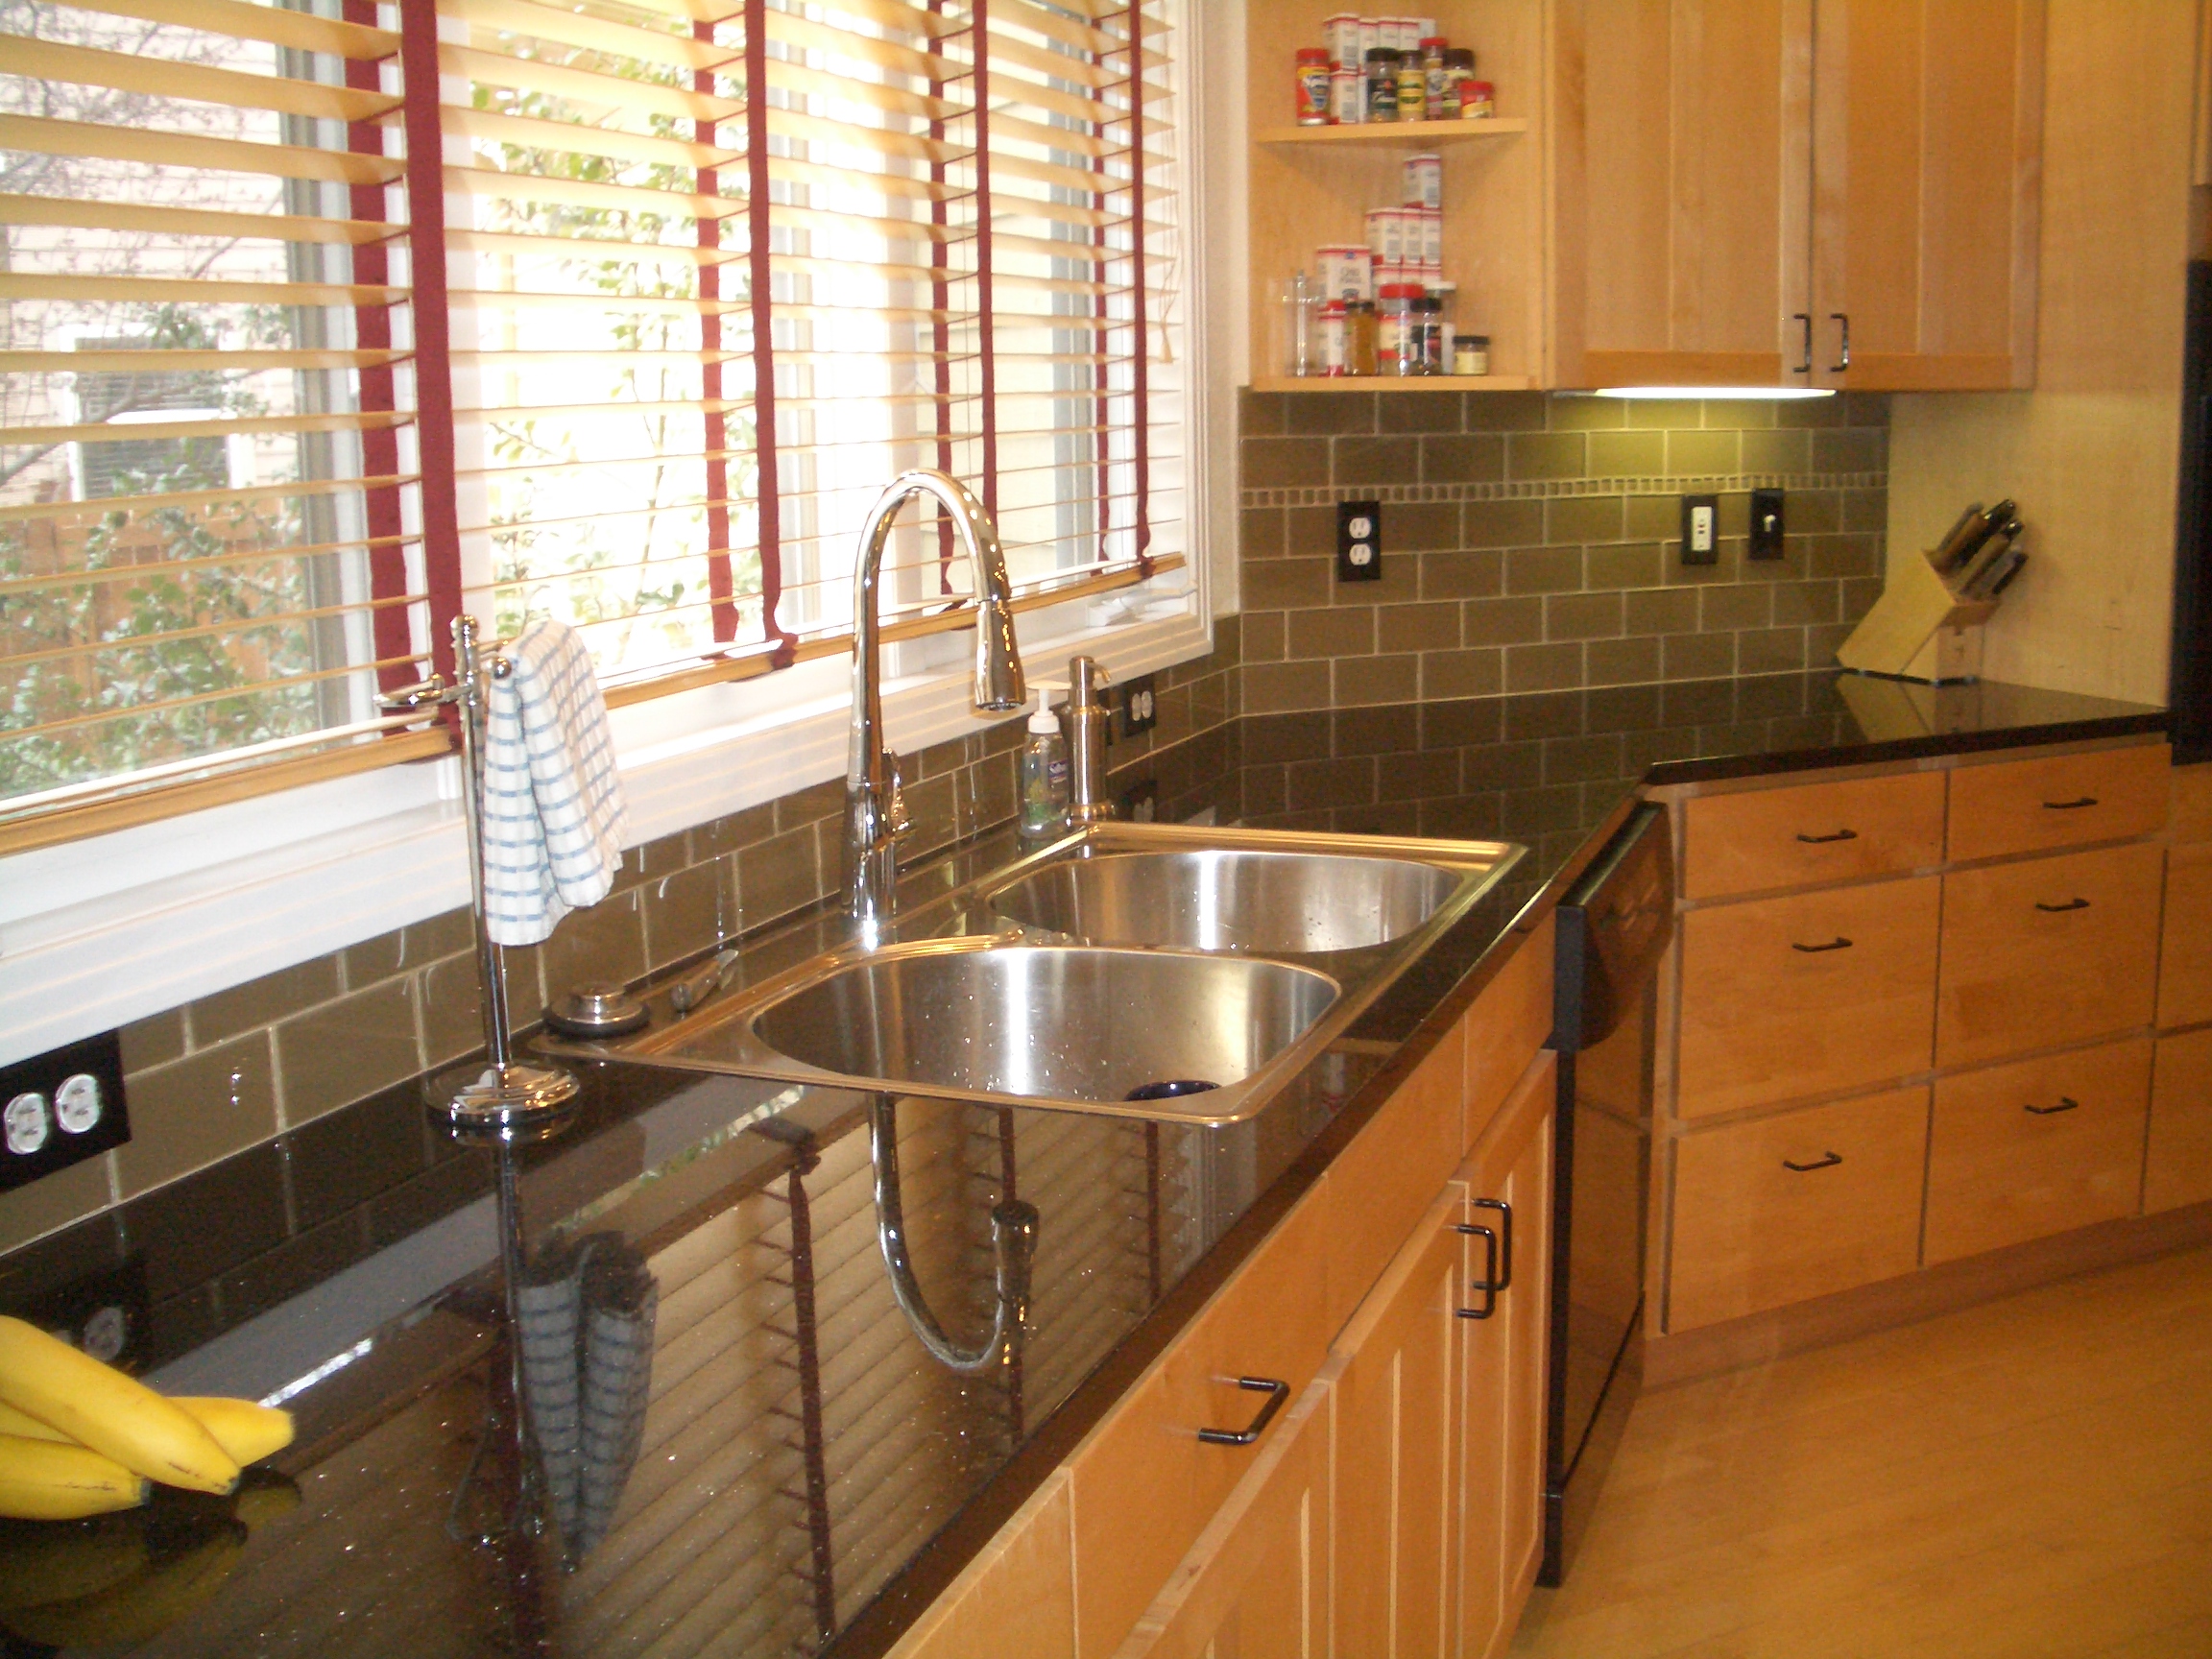 Backsplash Herringbone Subway Tile Best Of Glass Tiles for Kitchen Wall Rumah Joglo Limasan Work